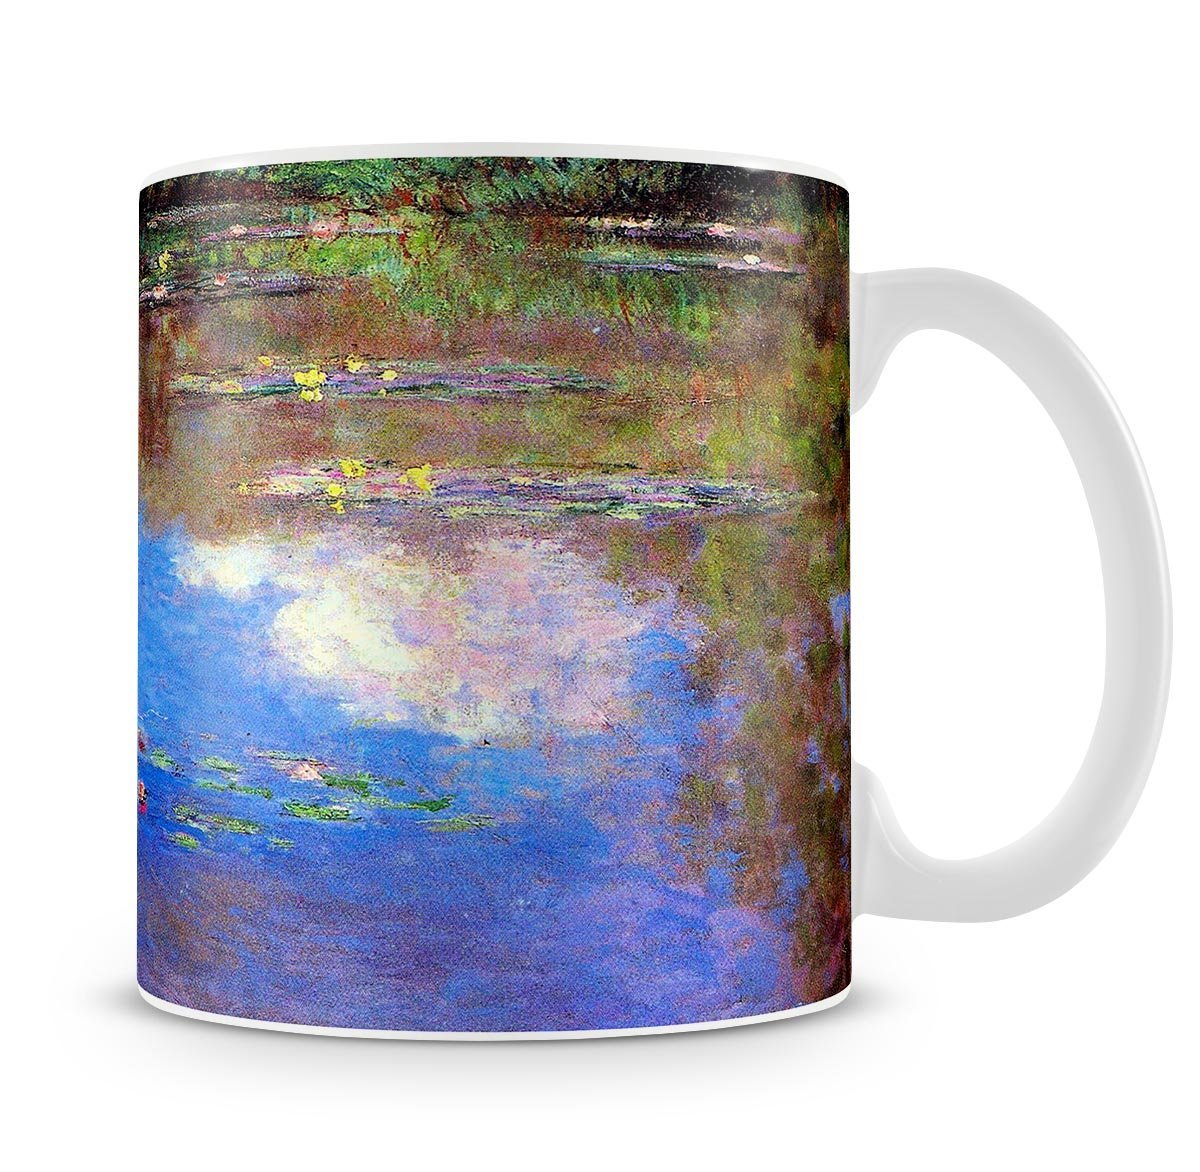 Water Lily Pond 4 by Monet Mug - Canvas Art Rocks - 4